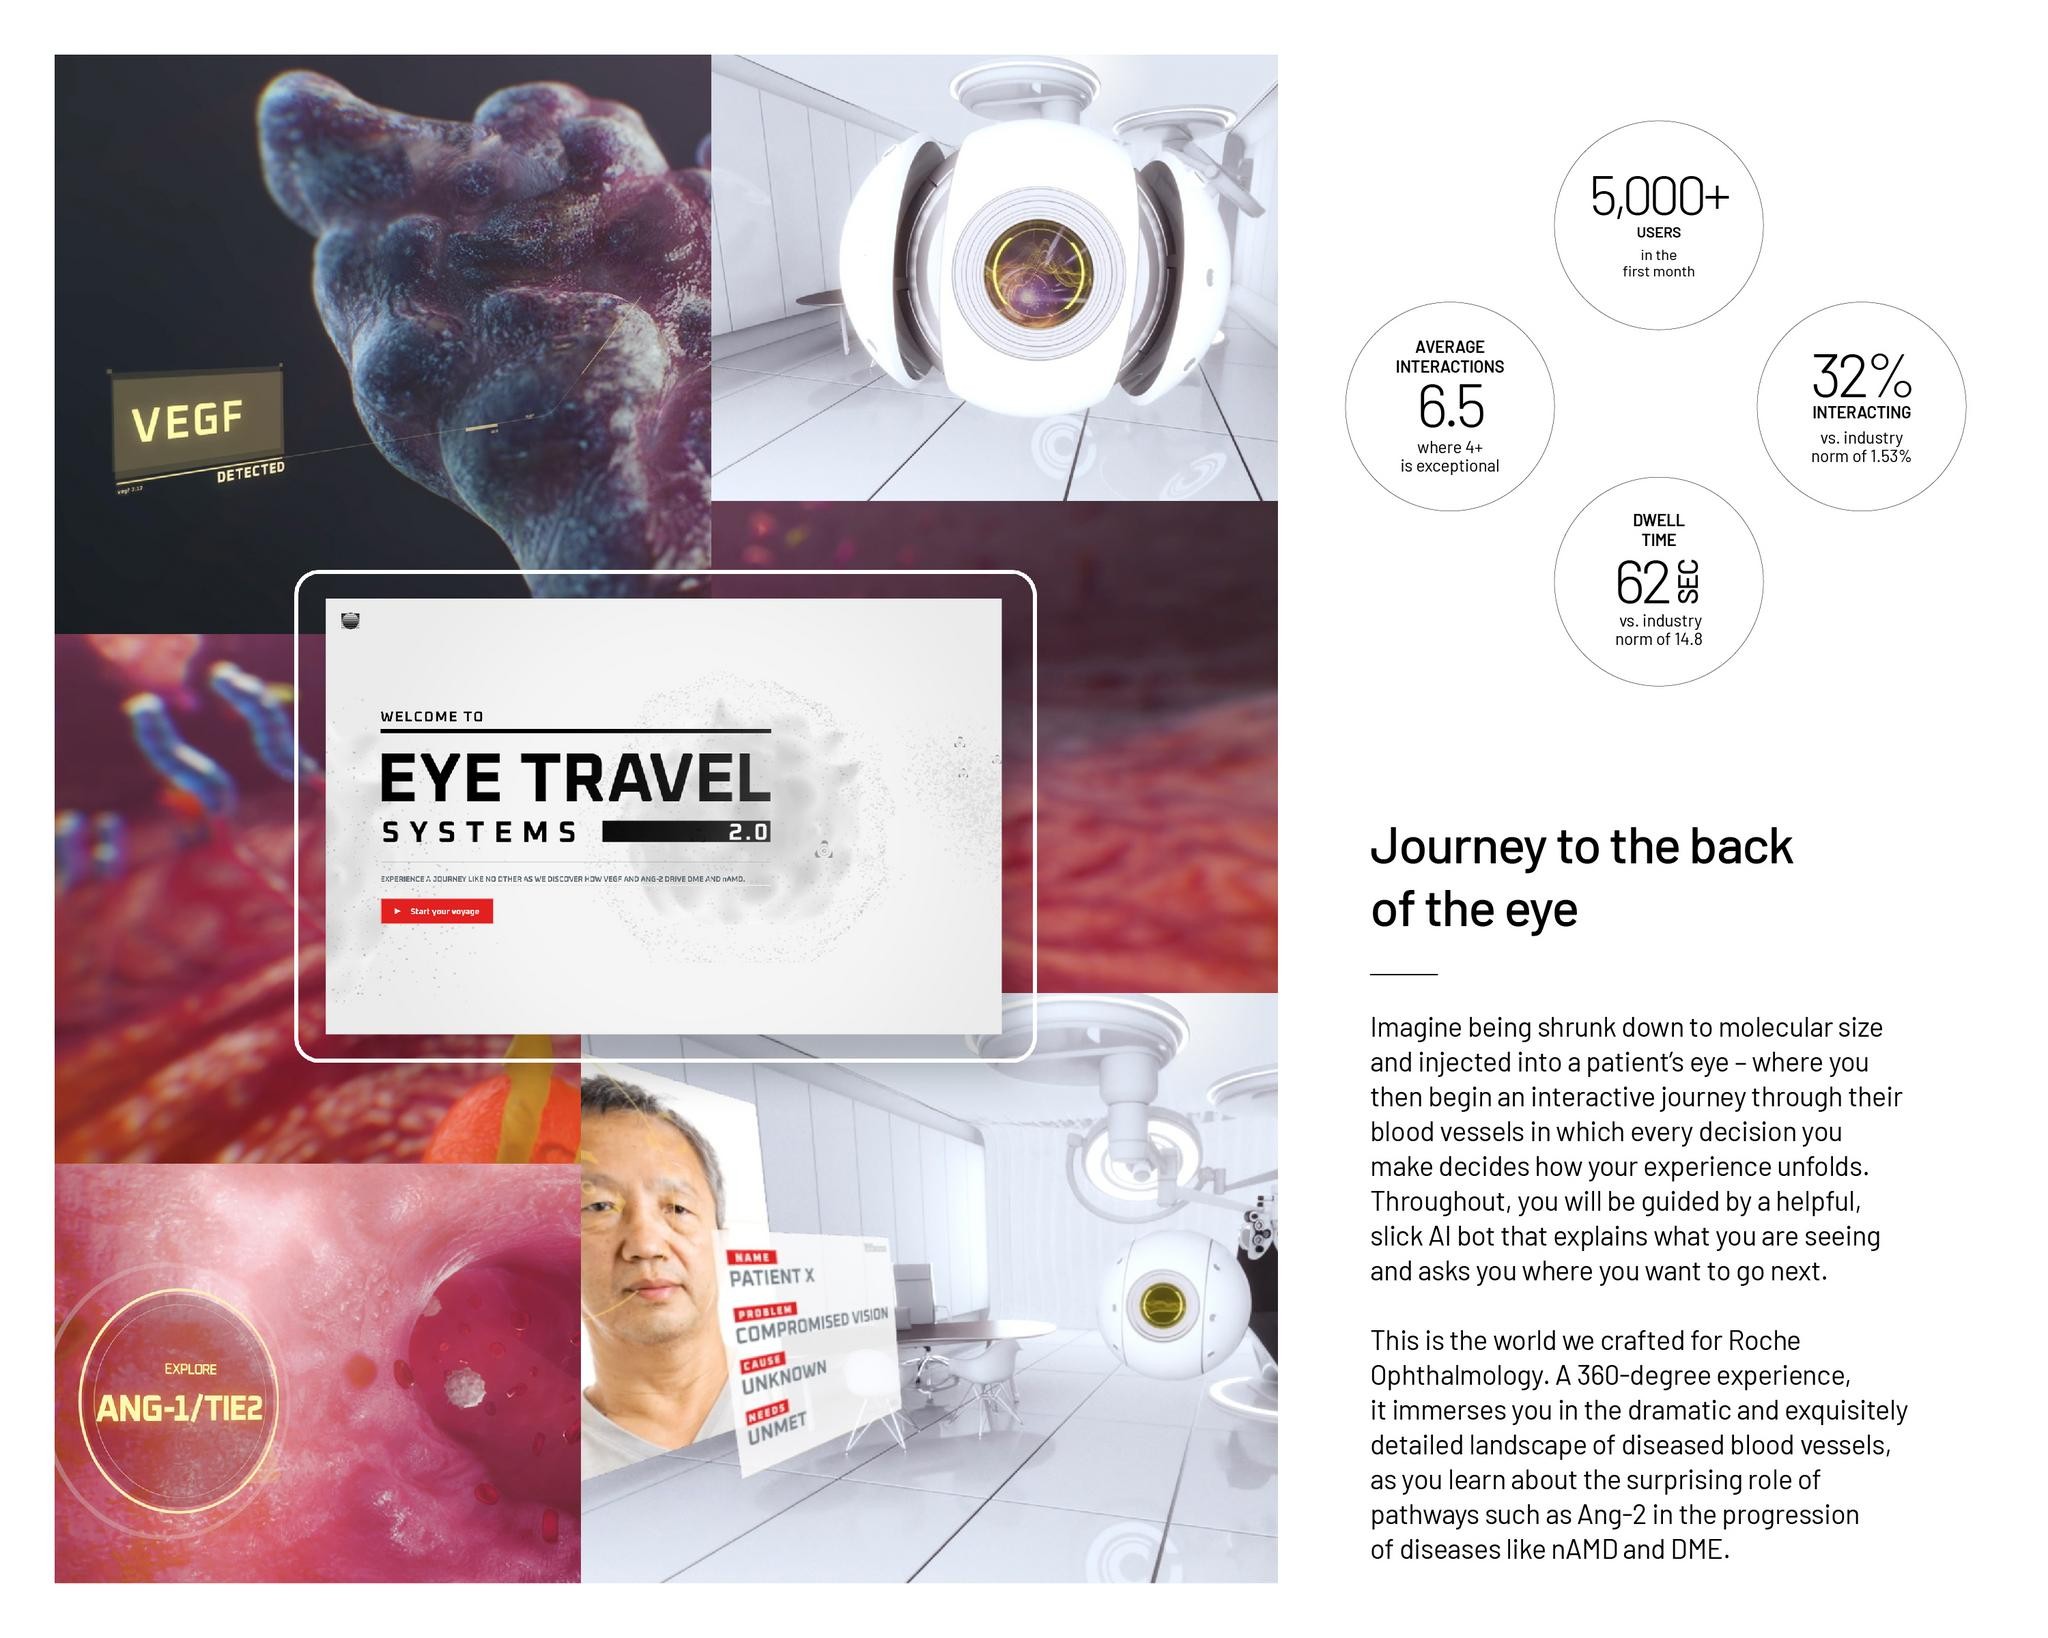 Eye Travel Systems 2.0